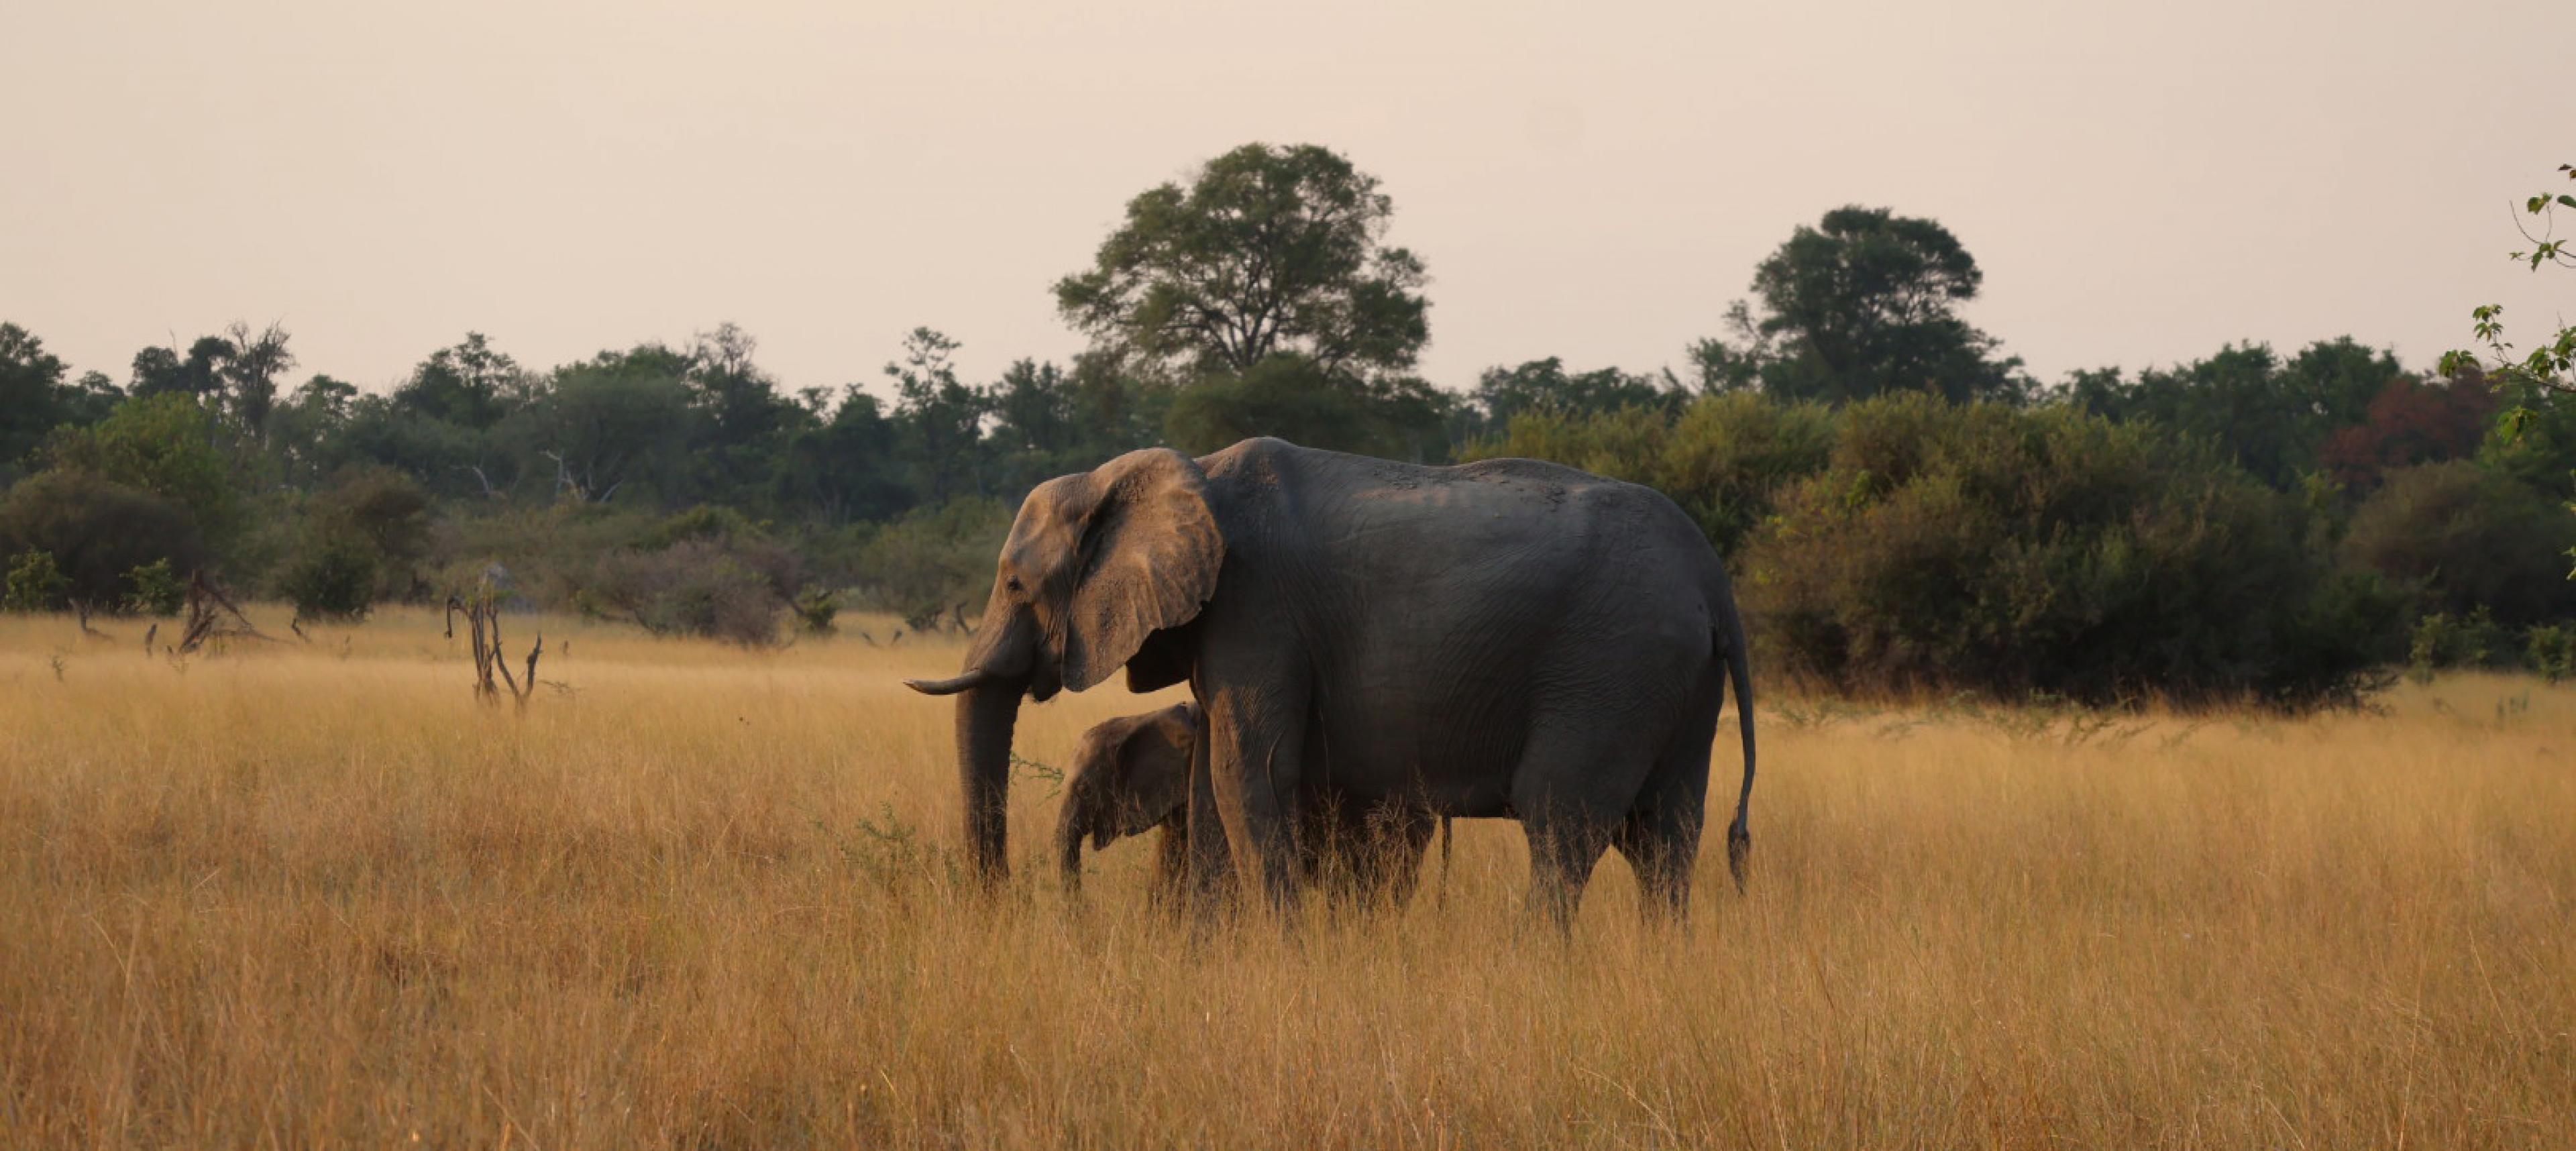 Elephant with calf, Botswana